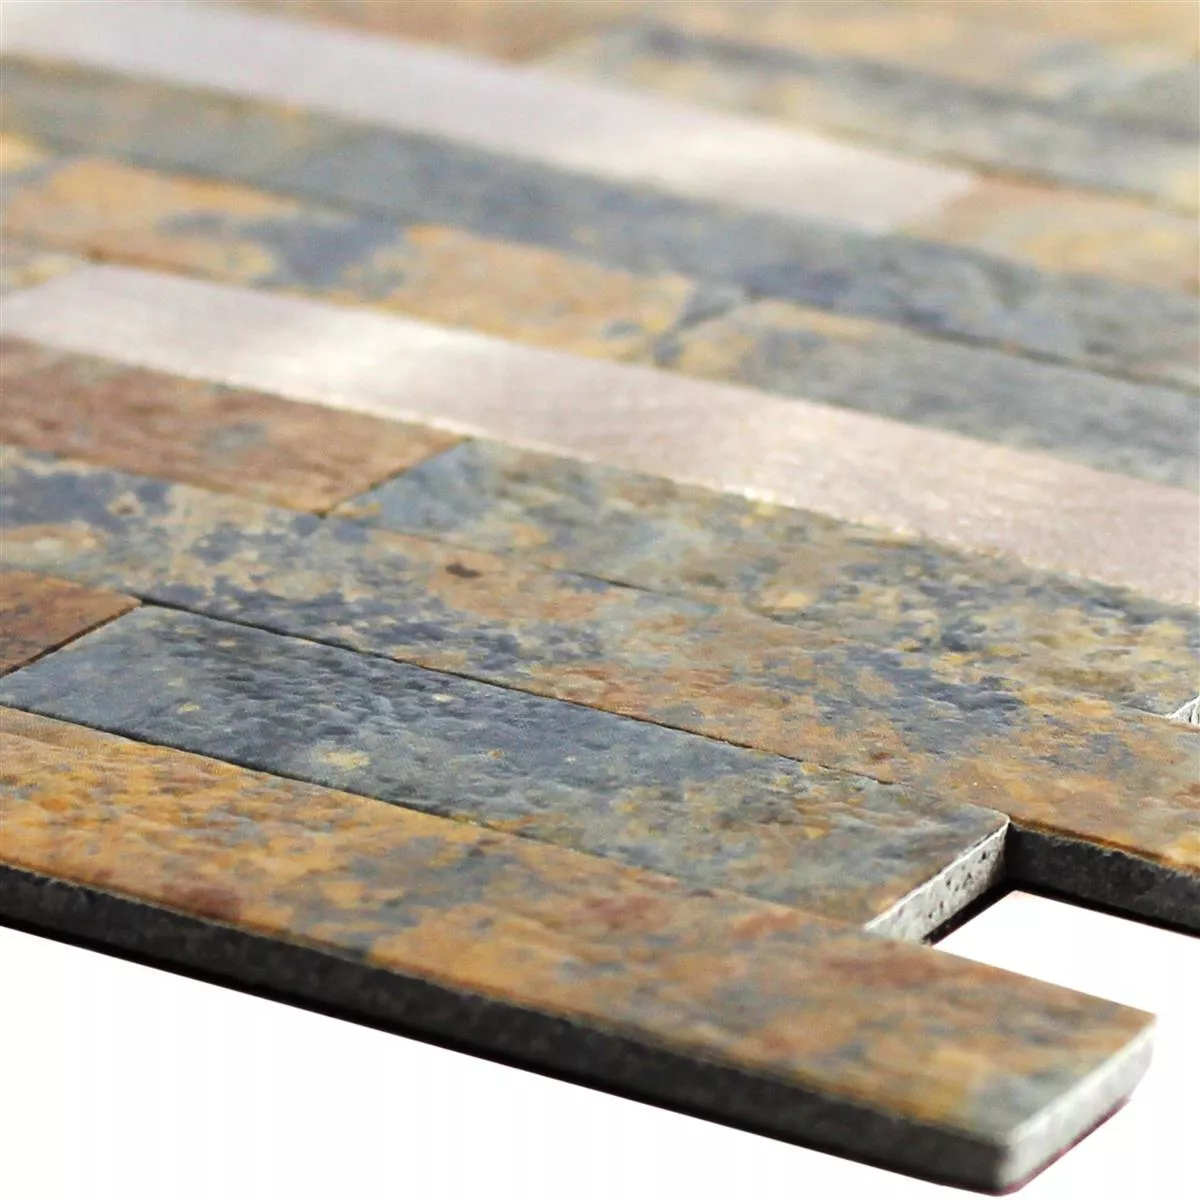 Vinyl Mosaic Tiles Maywald Self Adhesive Brown Gold